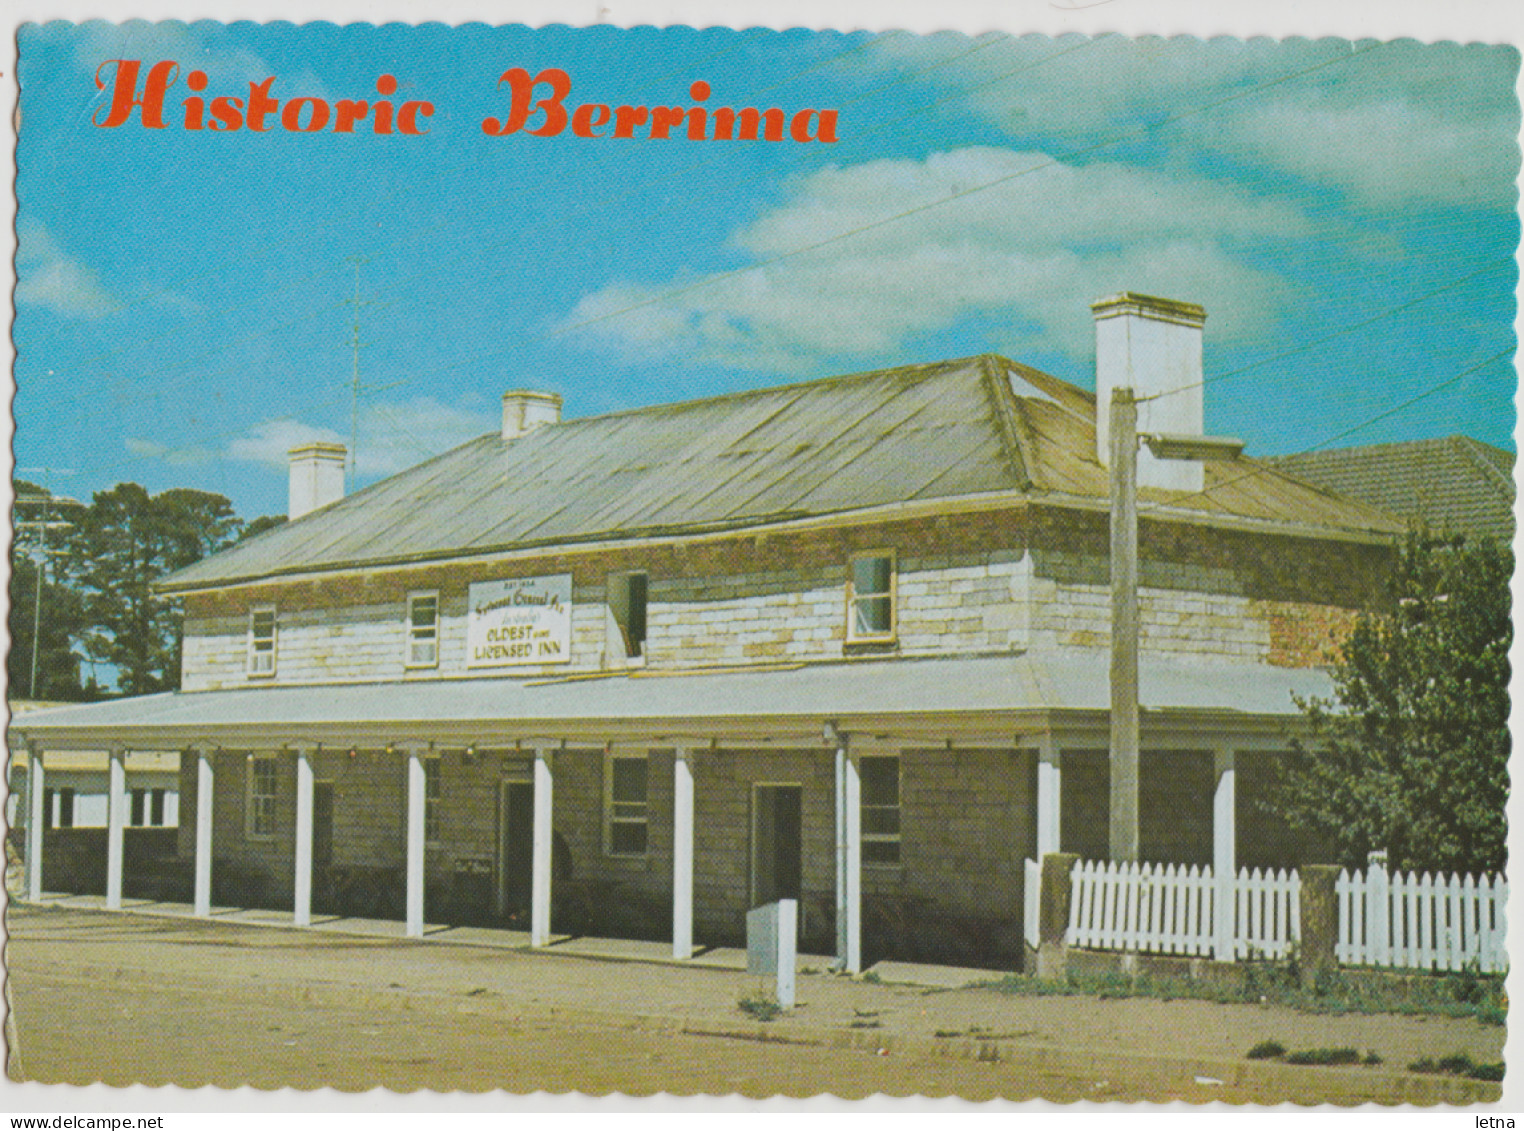 Australia NEW SOUTH WALES NSW Surveyor General Historic Inn BERRIMA ICP 8024 Postcard 1984 Pmk Butterfly Stamp - Autres & Non Classés